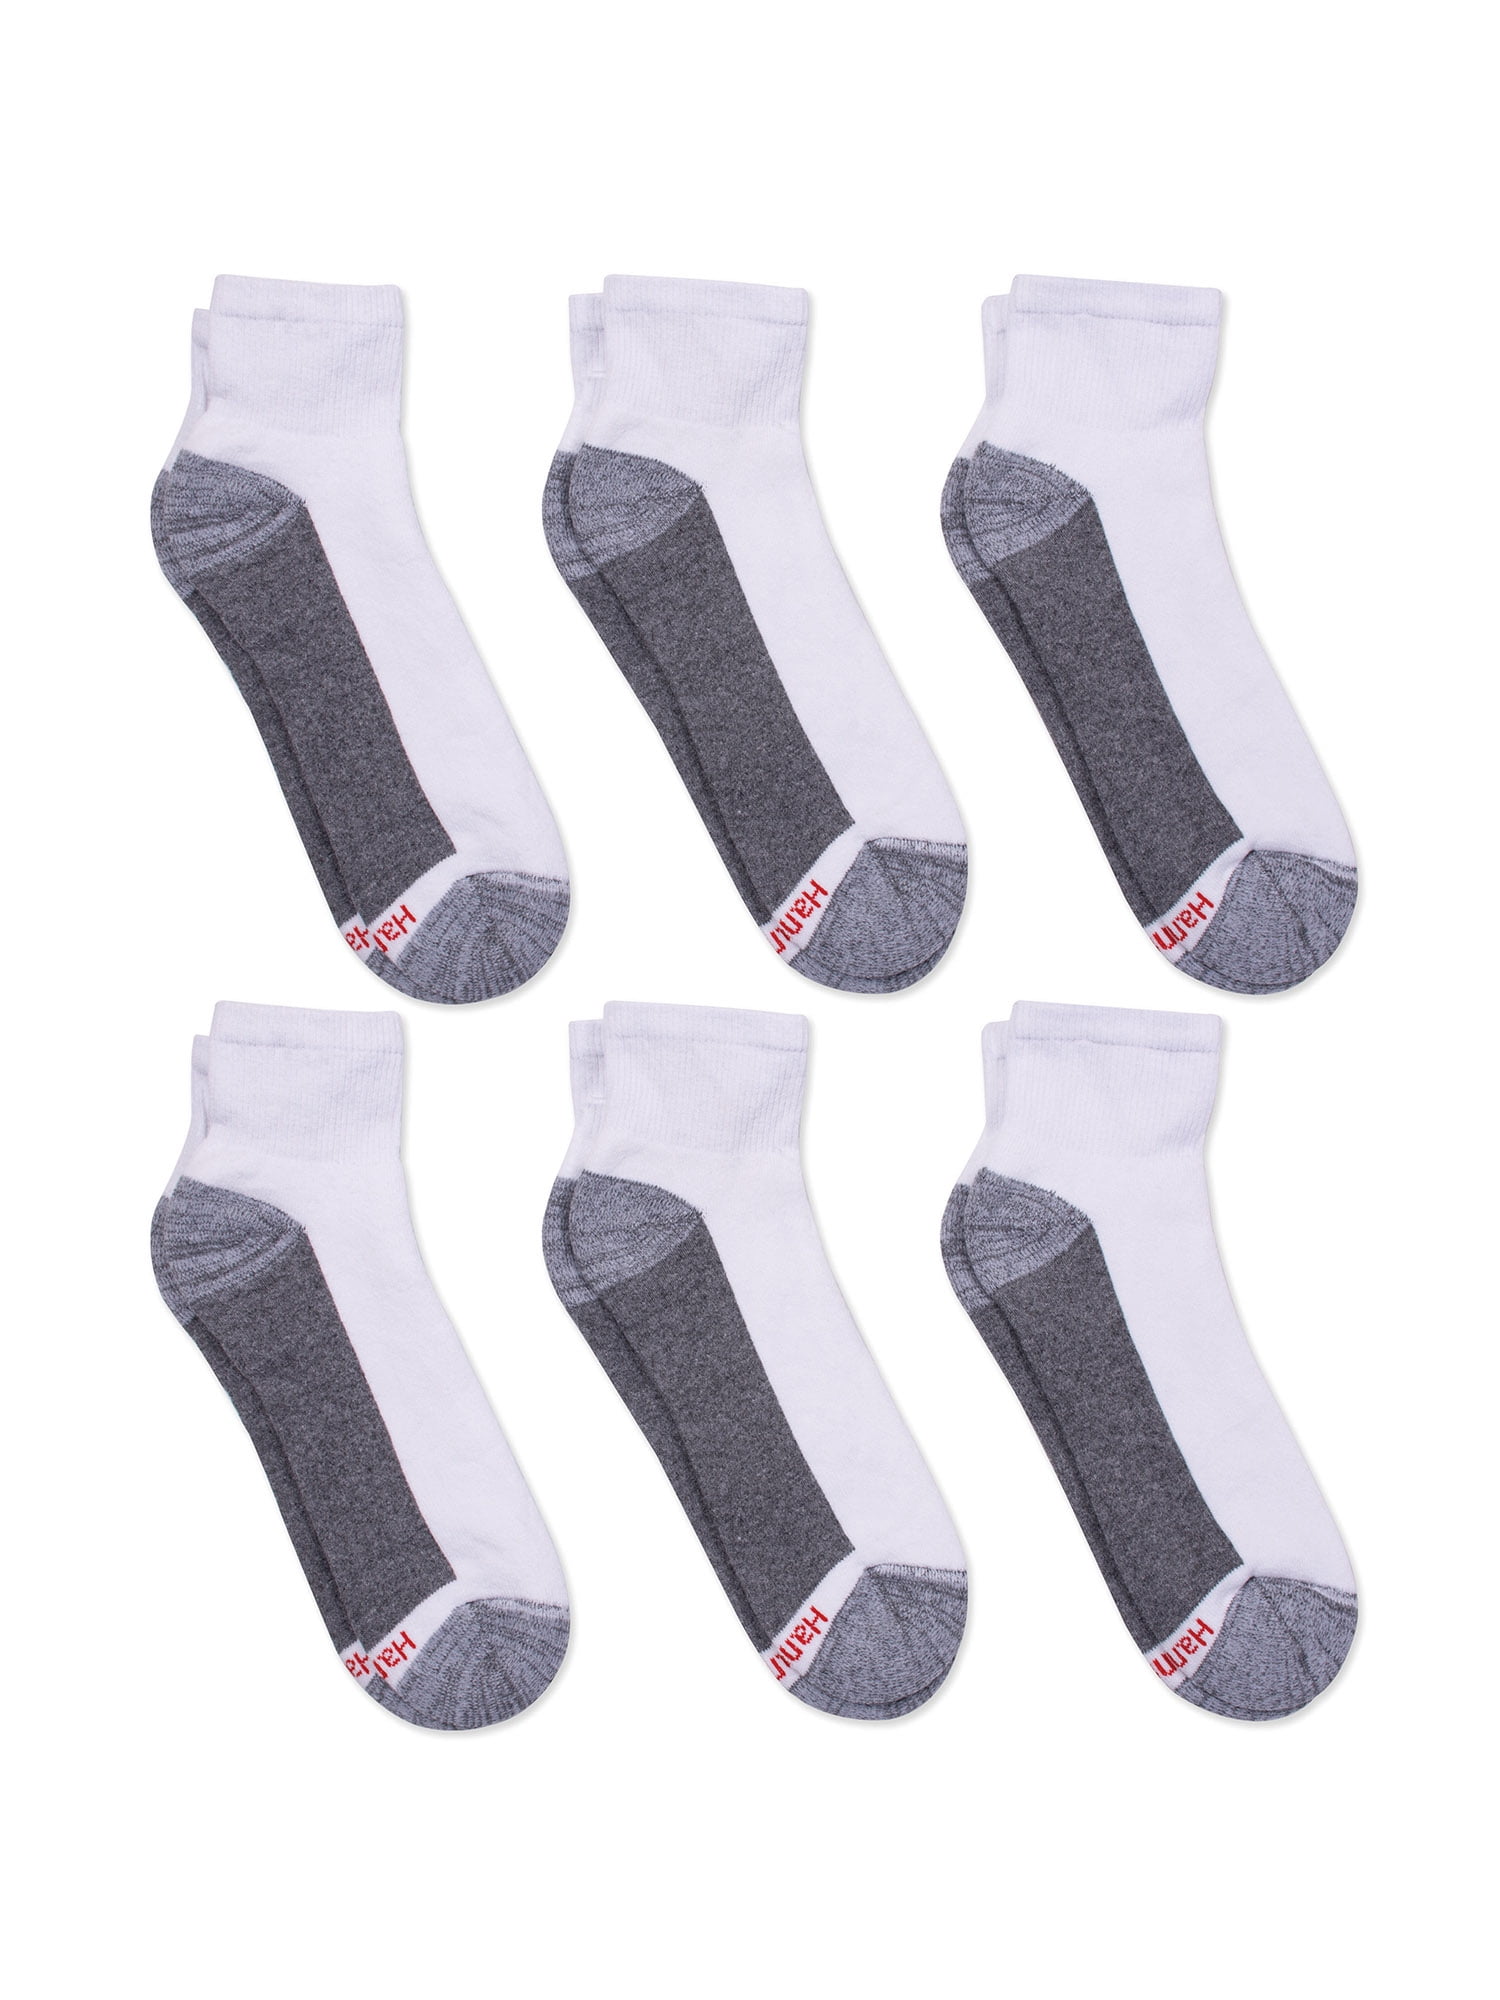 Hanes Men's Max Cushion Ankle Socks, 6-Pack 